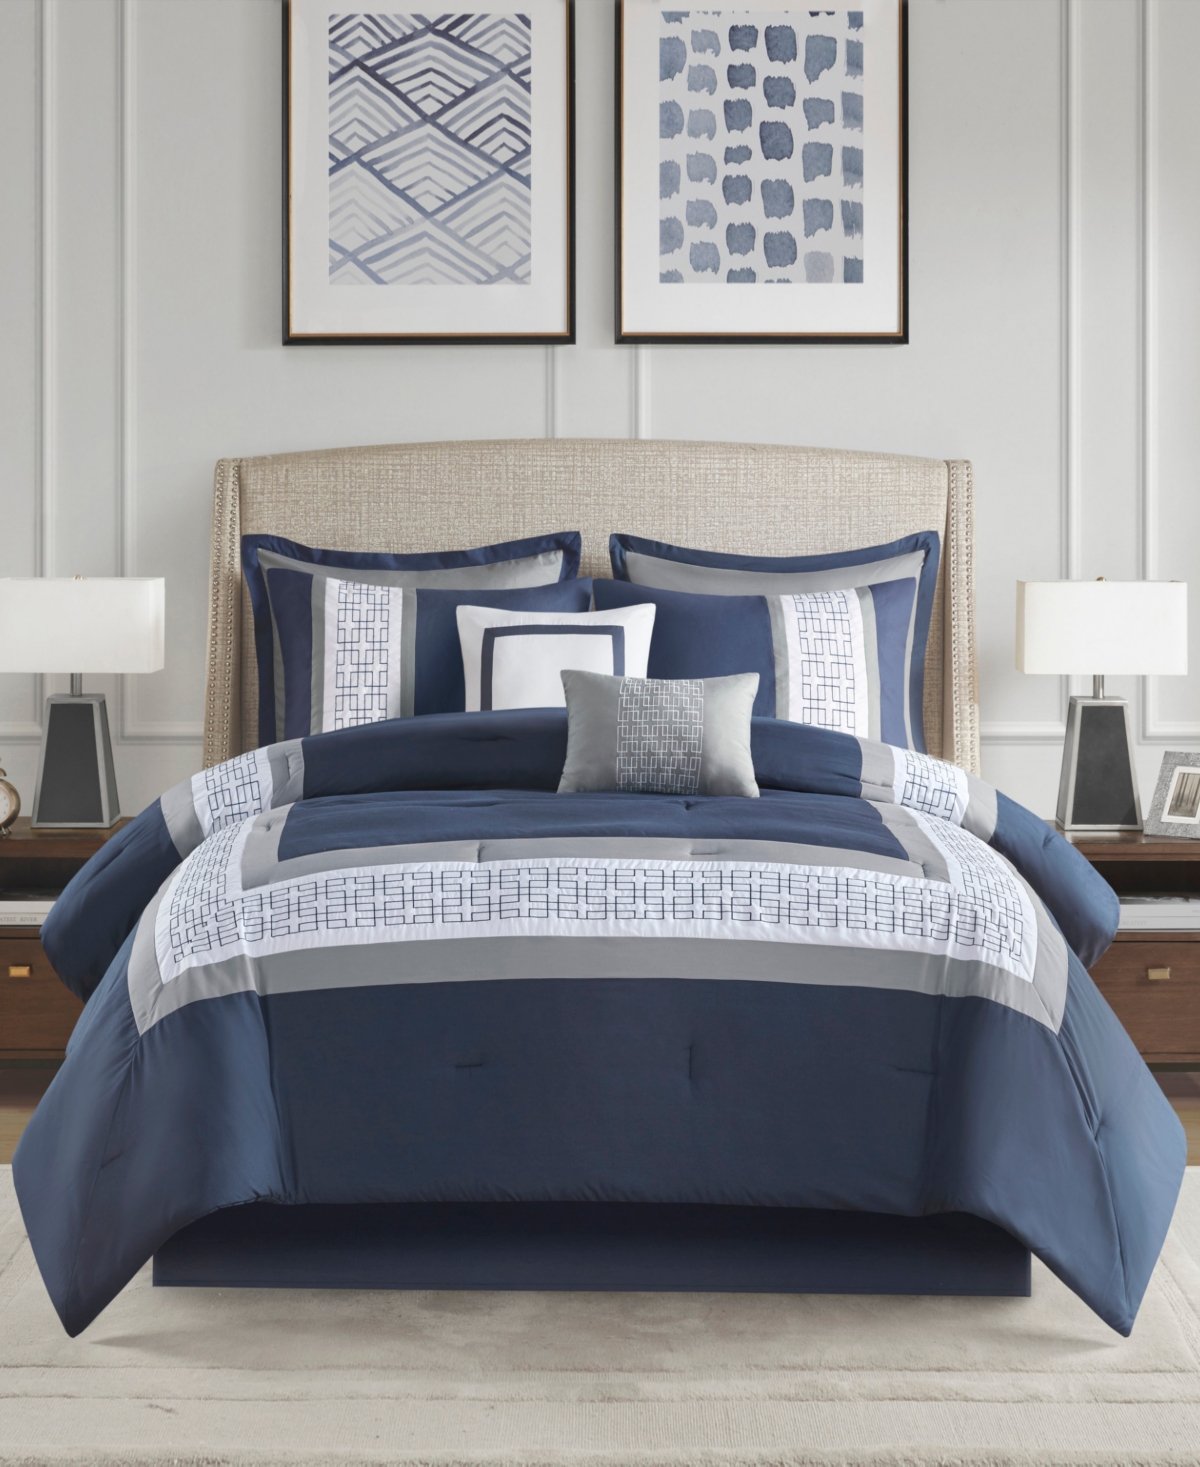 510 Design Powell Embroidered 8 Piece Comforter Set, Queen Bedding